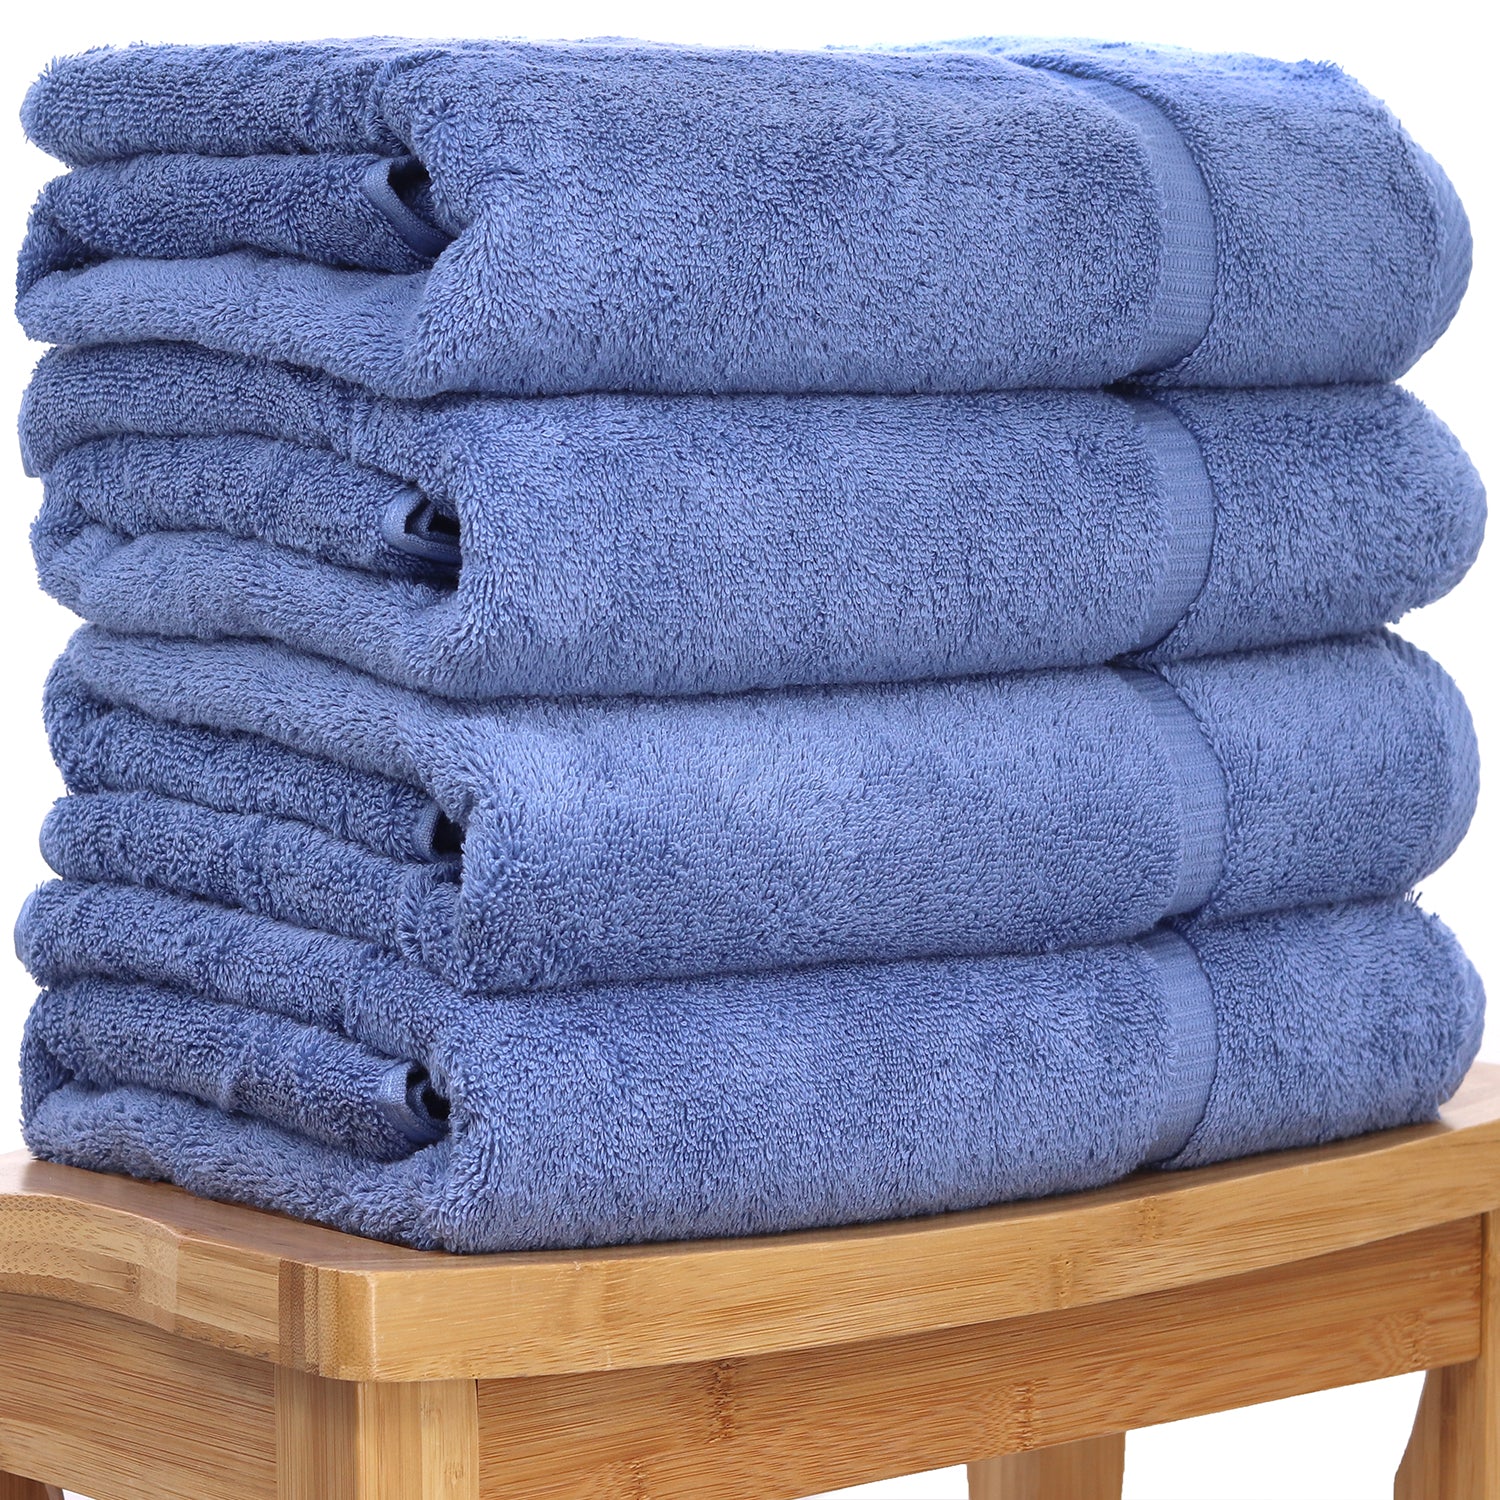 4 PIECE LUXURY LARGE SIZE BATH TOWEL SET FOR HOME HOTEL SPAS GUEST